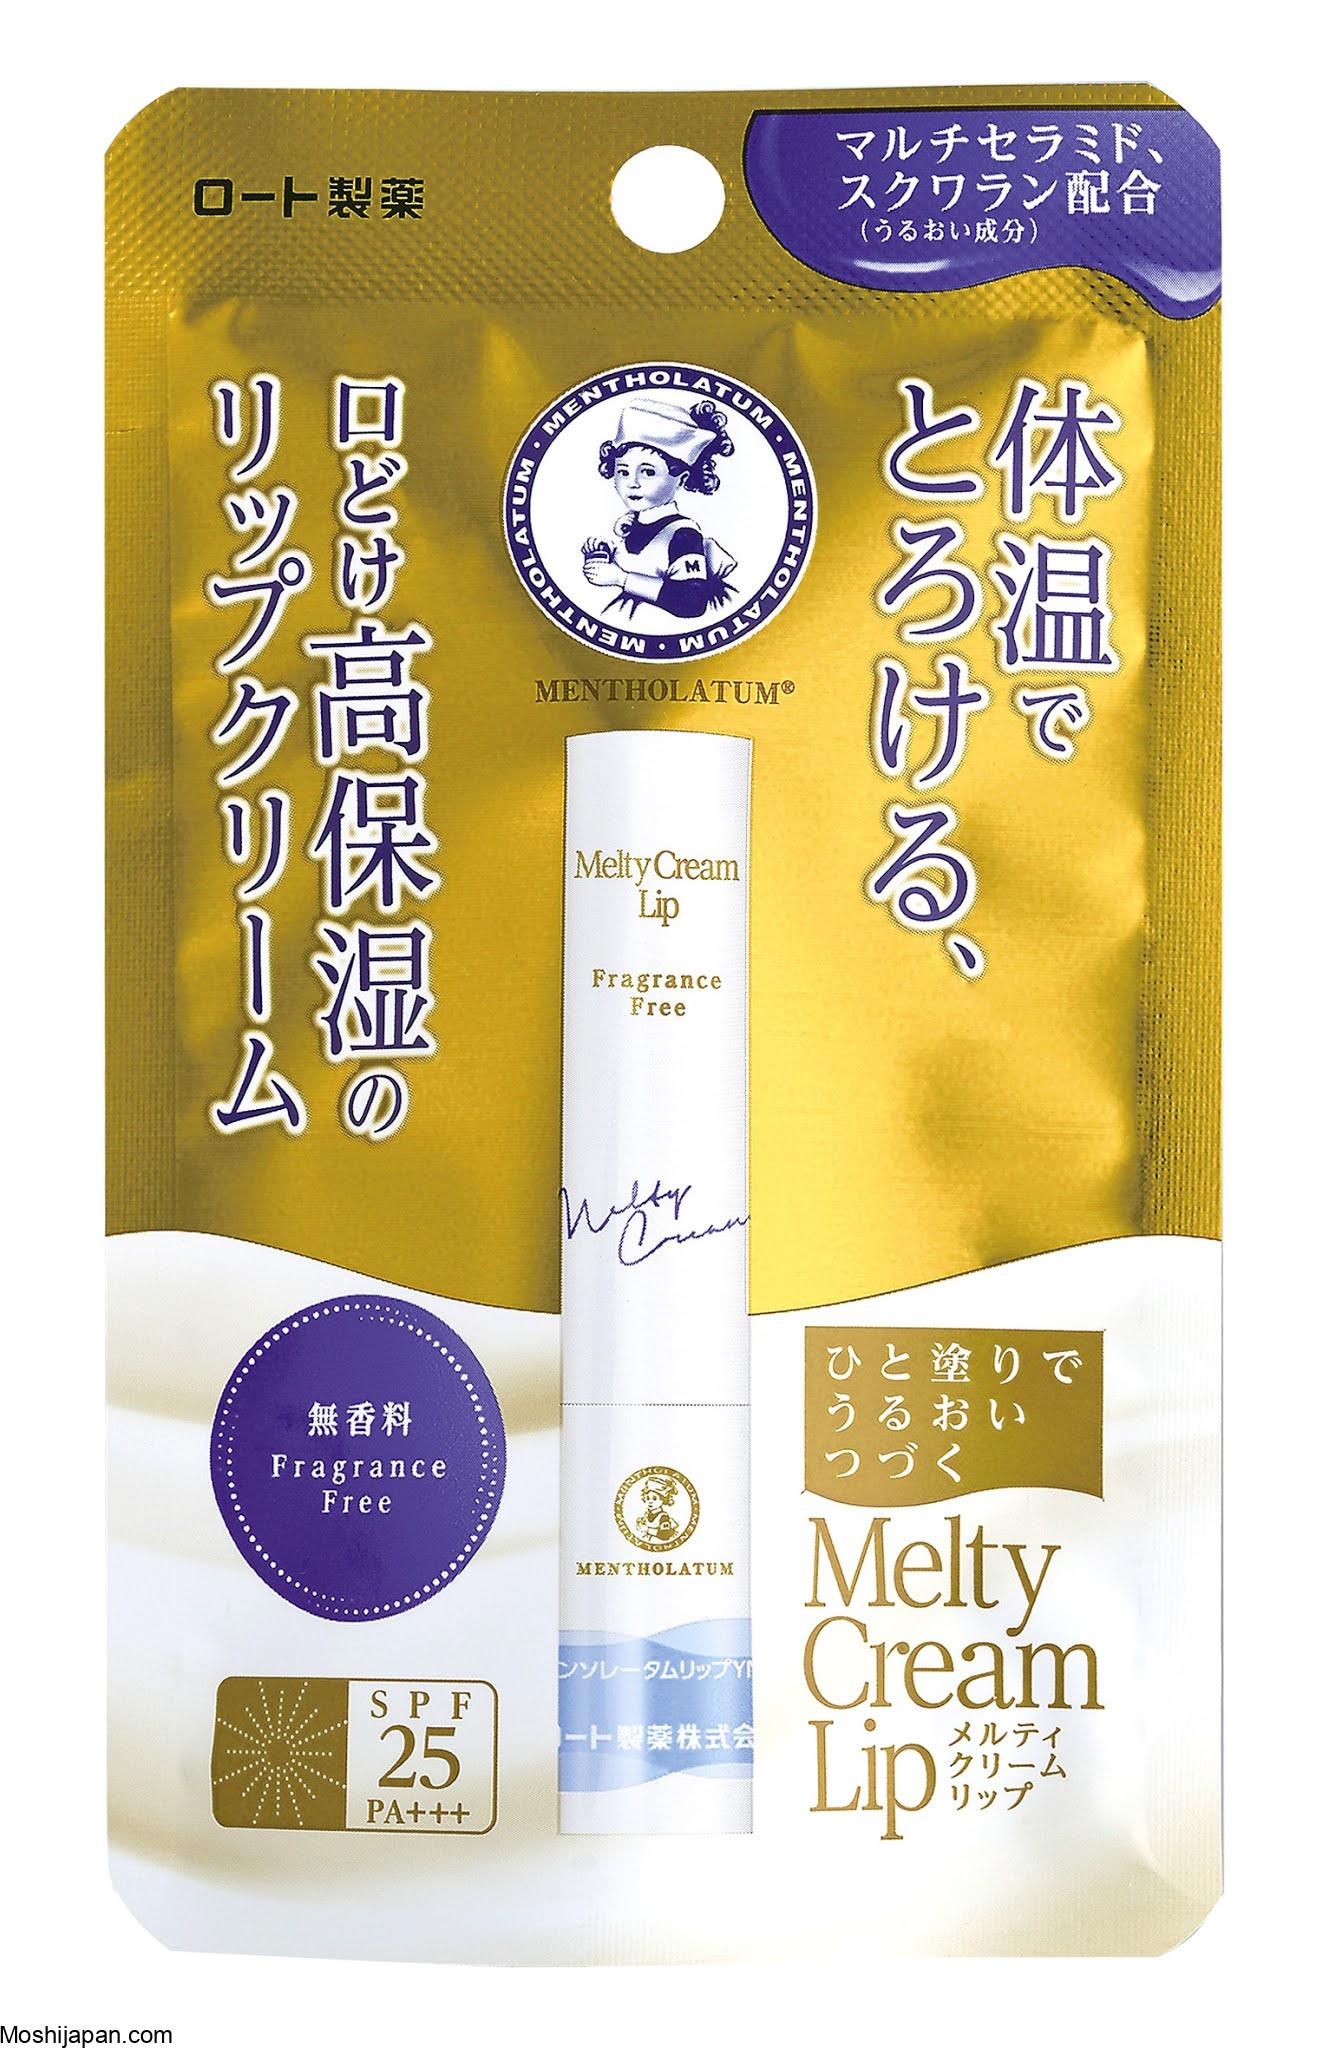 Mentholatum melty cream lip green tea 3